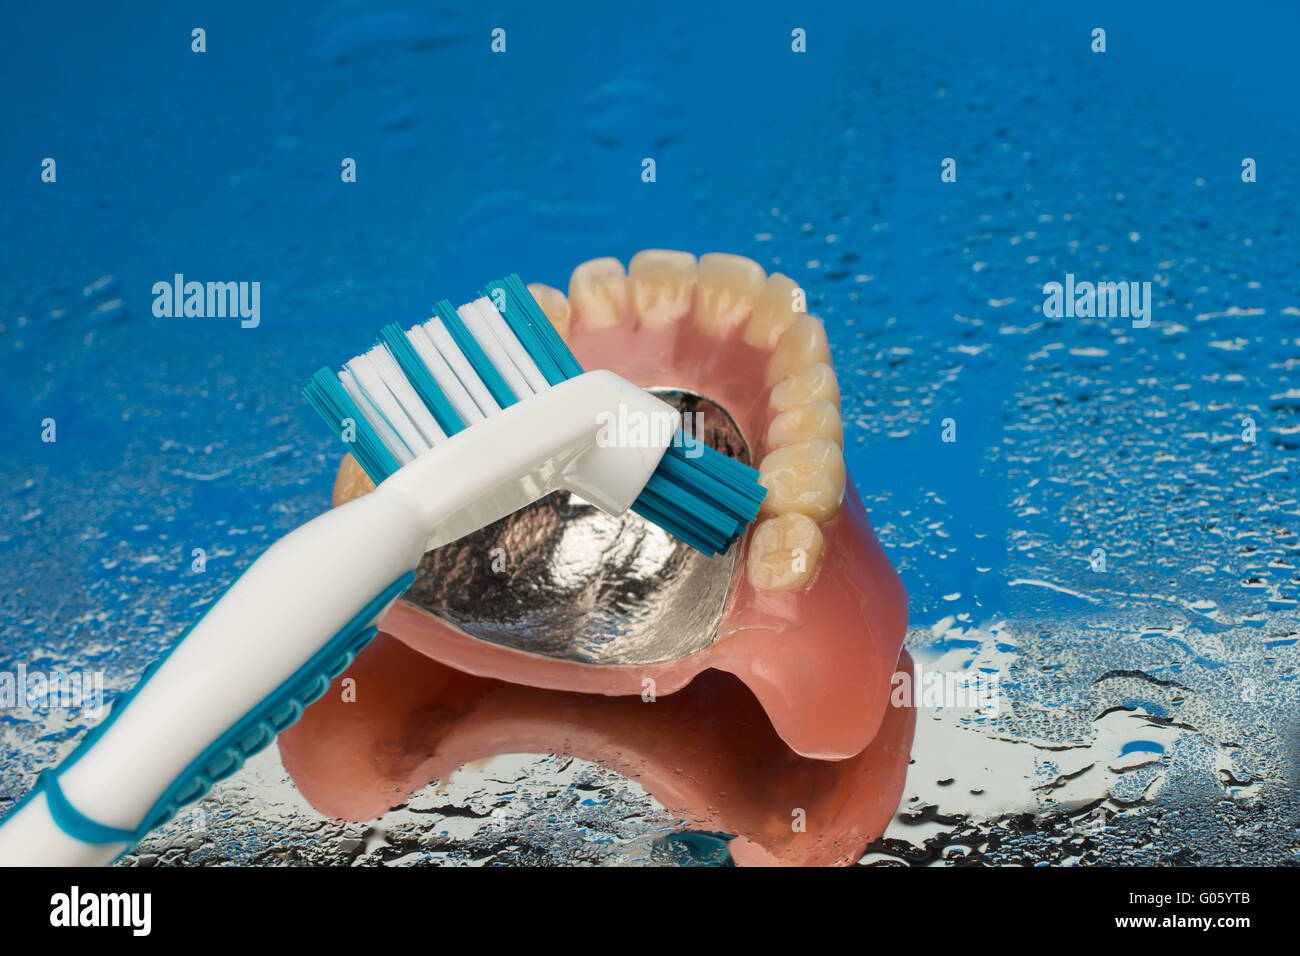 Dentition denture toothbrush Stock Photo